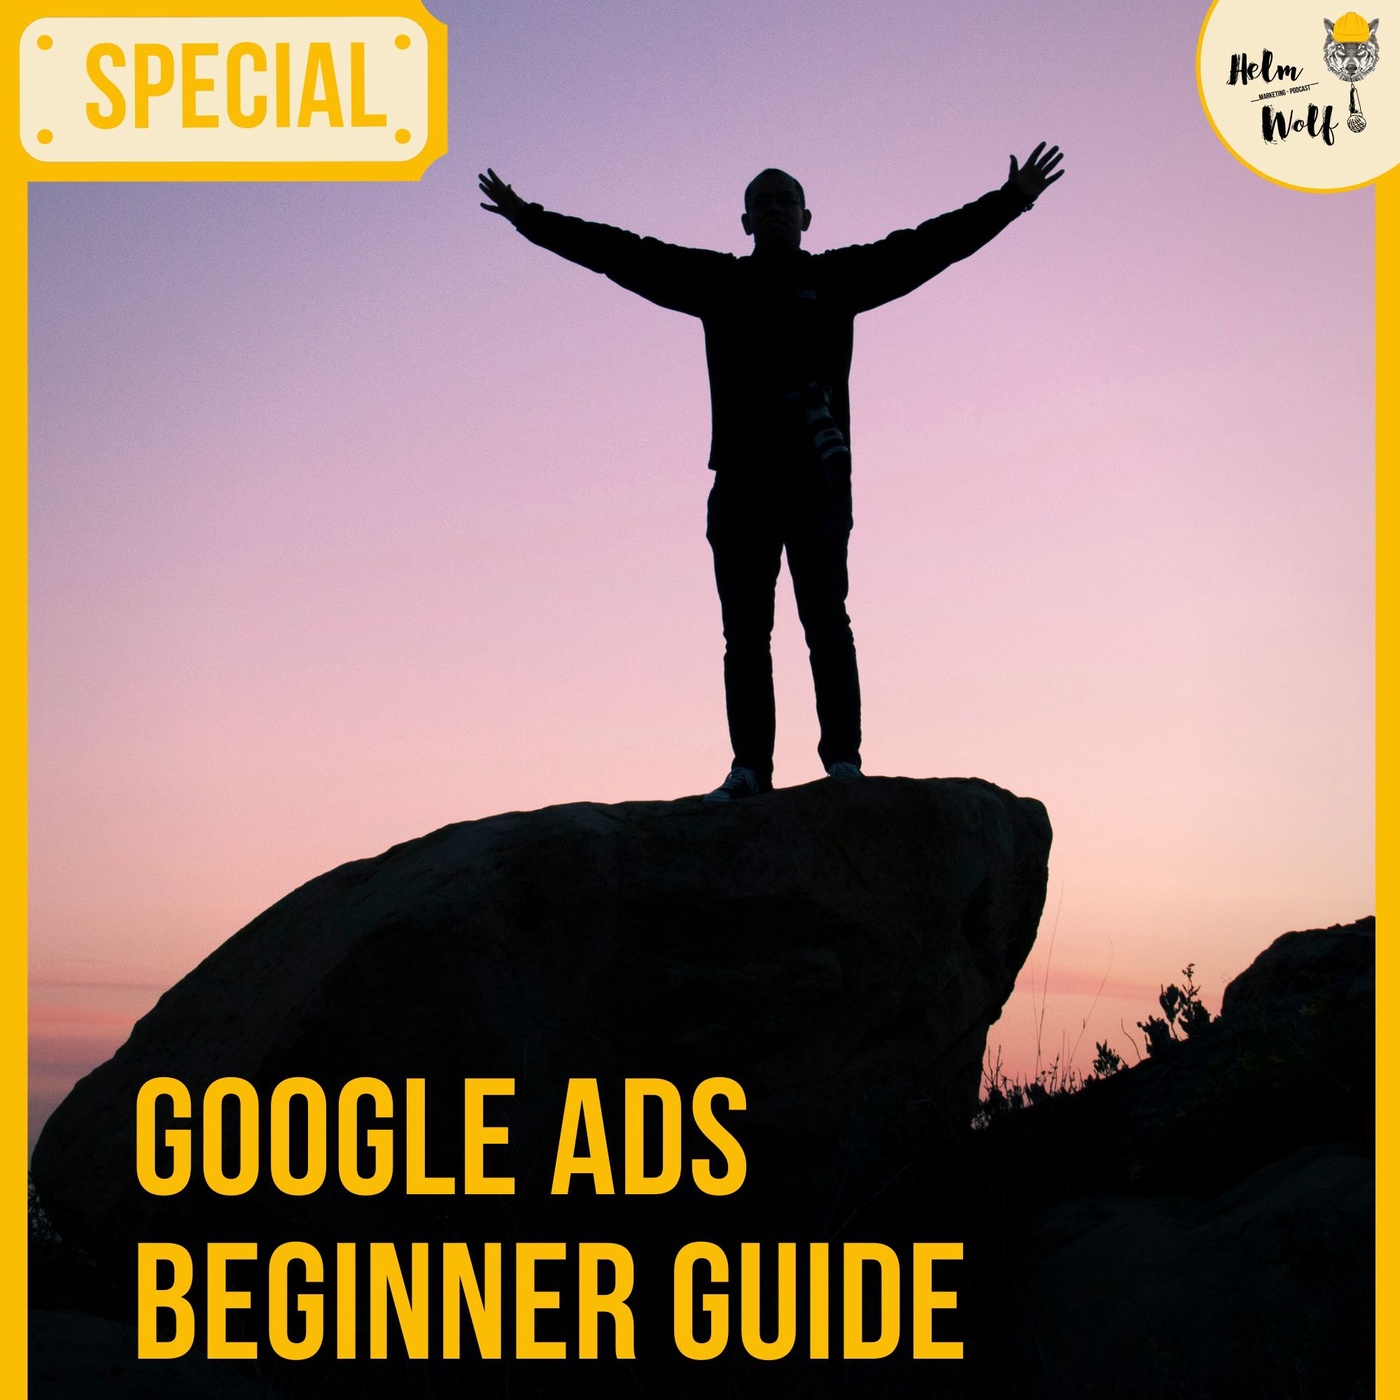 Der Große Google Ads Beginner Guide 2020 | #80 Helmwolf Marketing Podcast